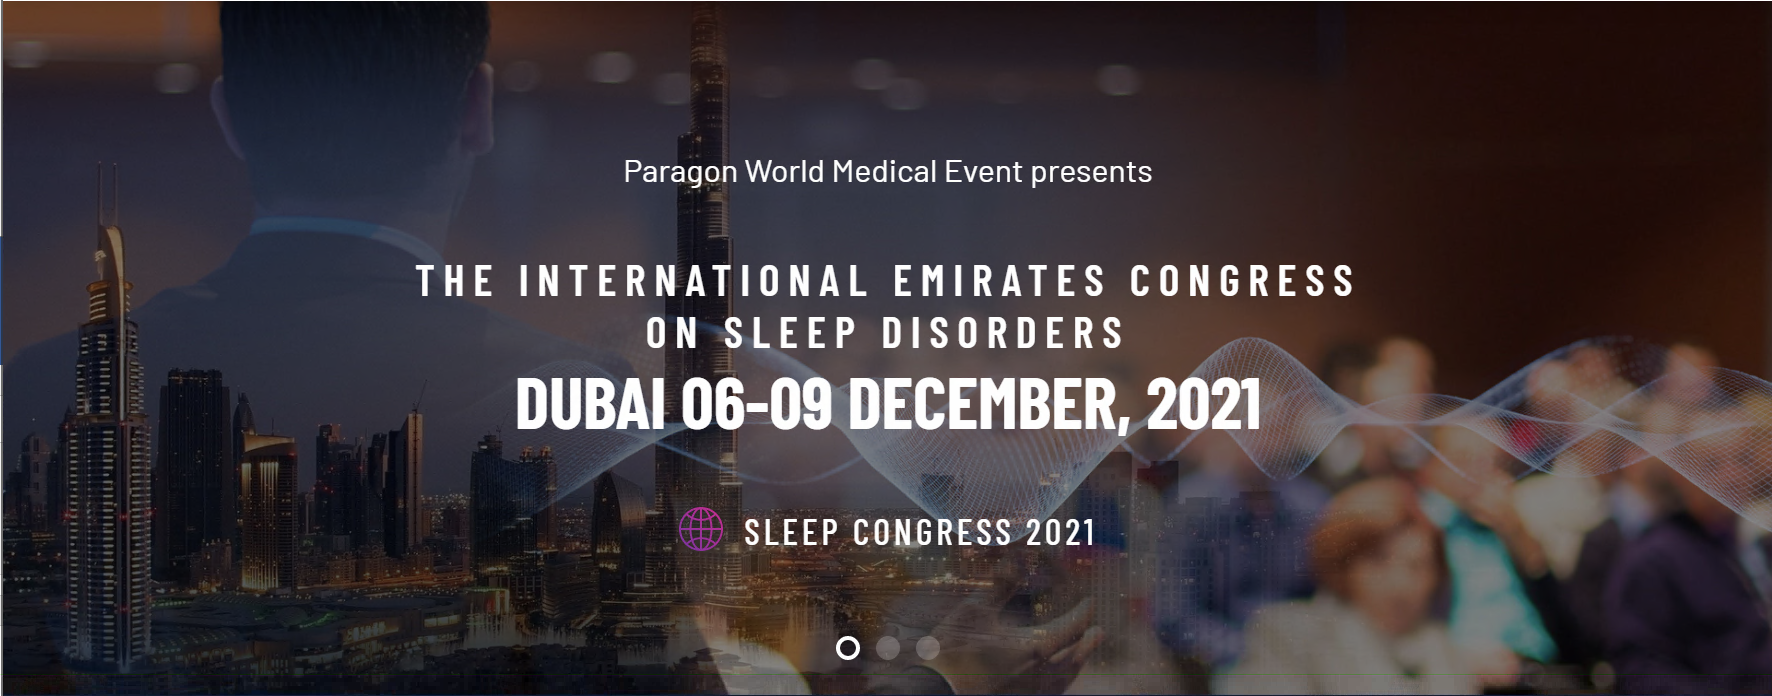 The International Emirates Congress on Sleep Disorders 2021